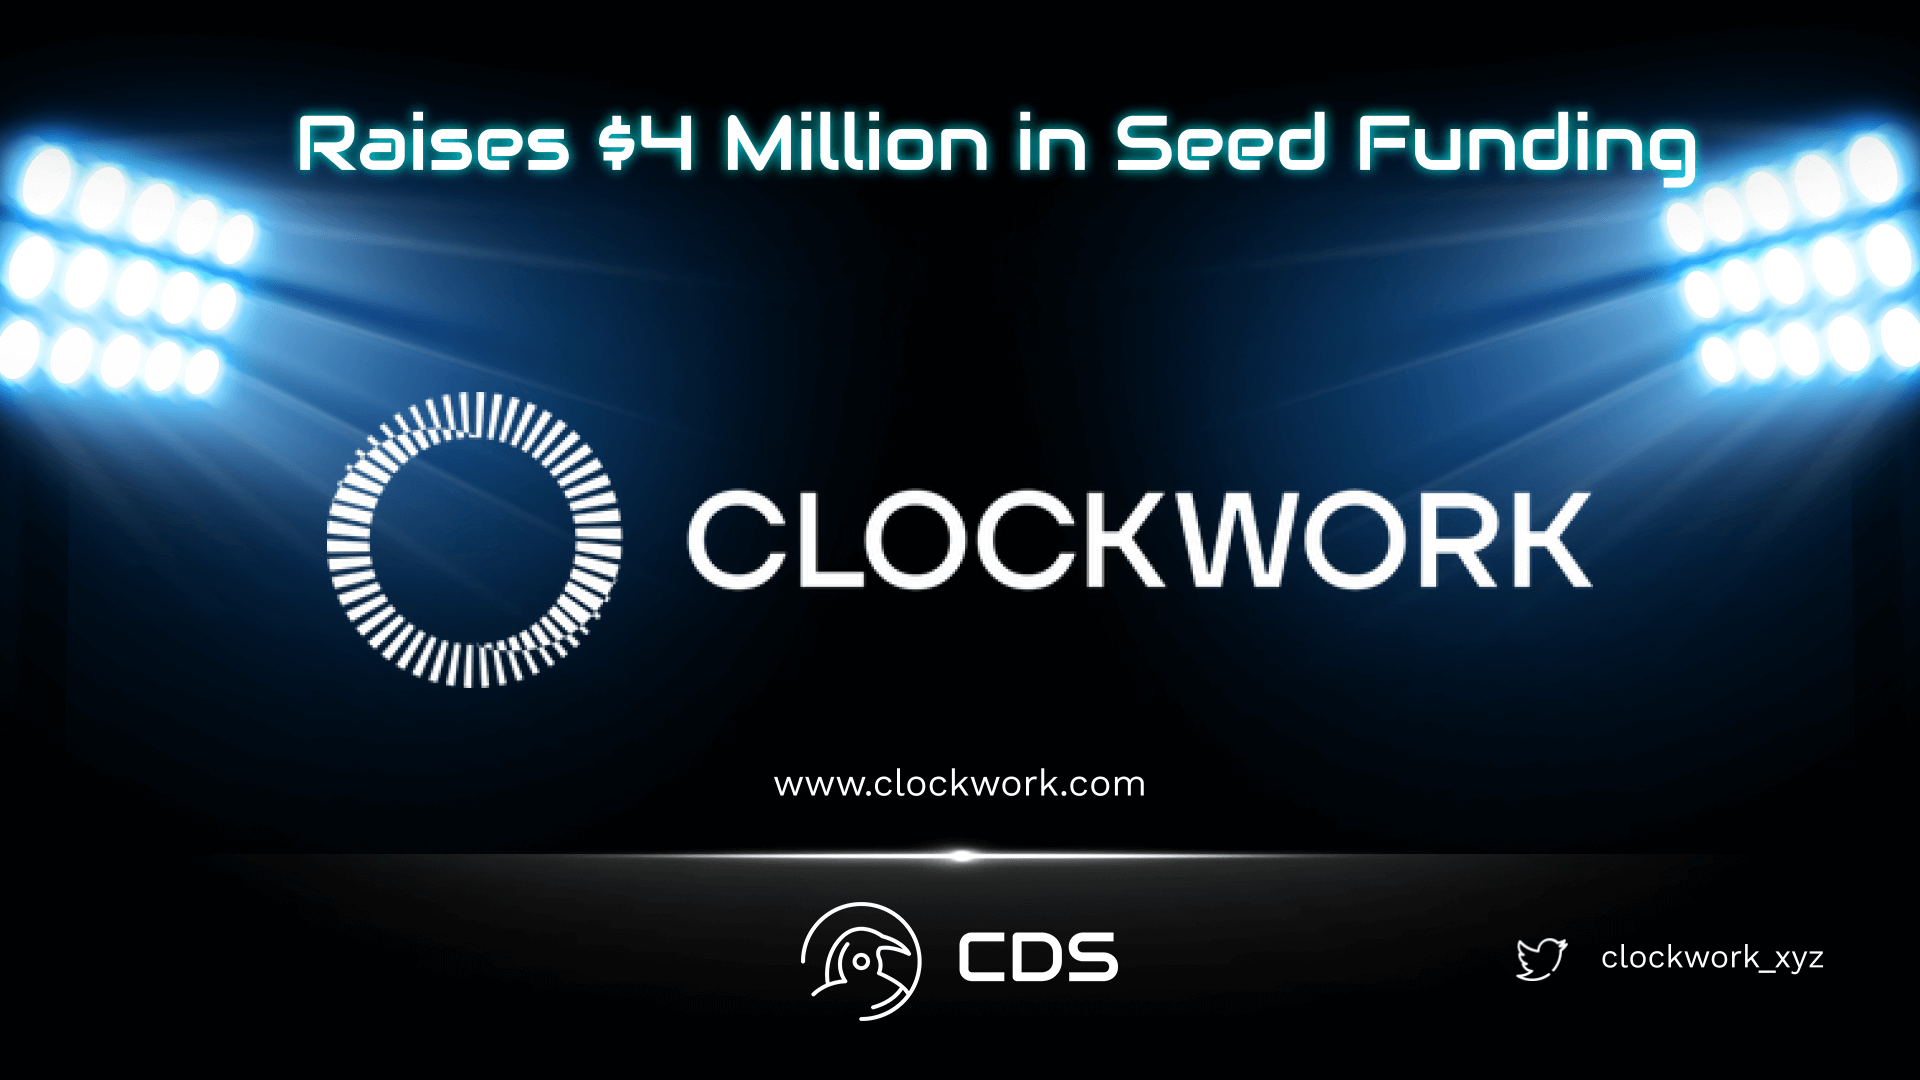 Clockwork Raises $4 million